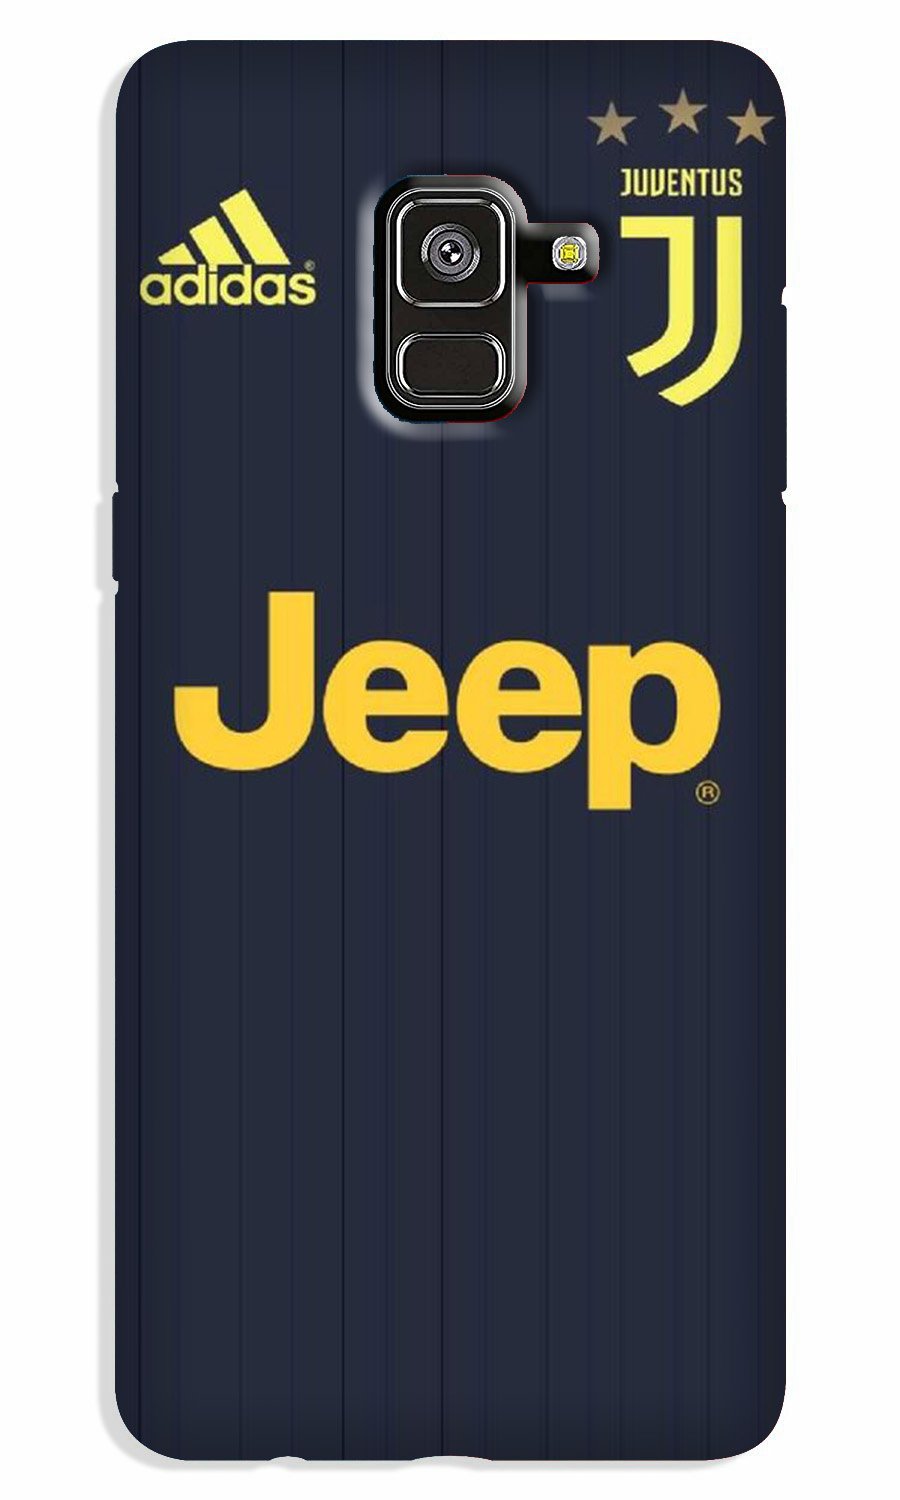 Jeep Juventus Case for Galaxy A5 (2018)  (Design - 161)